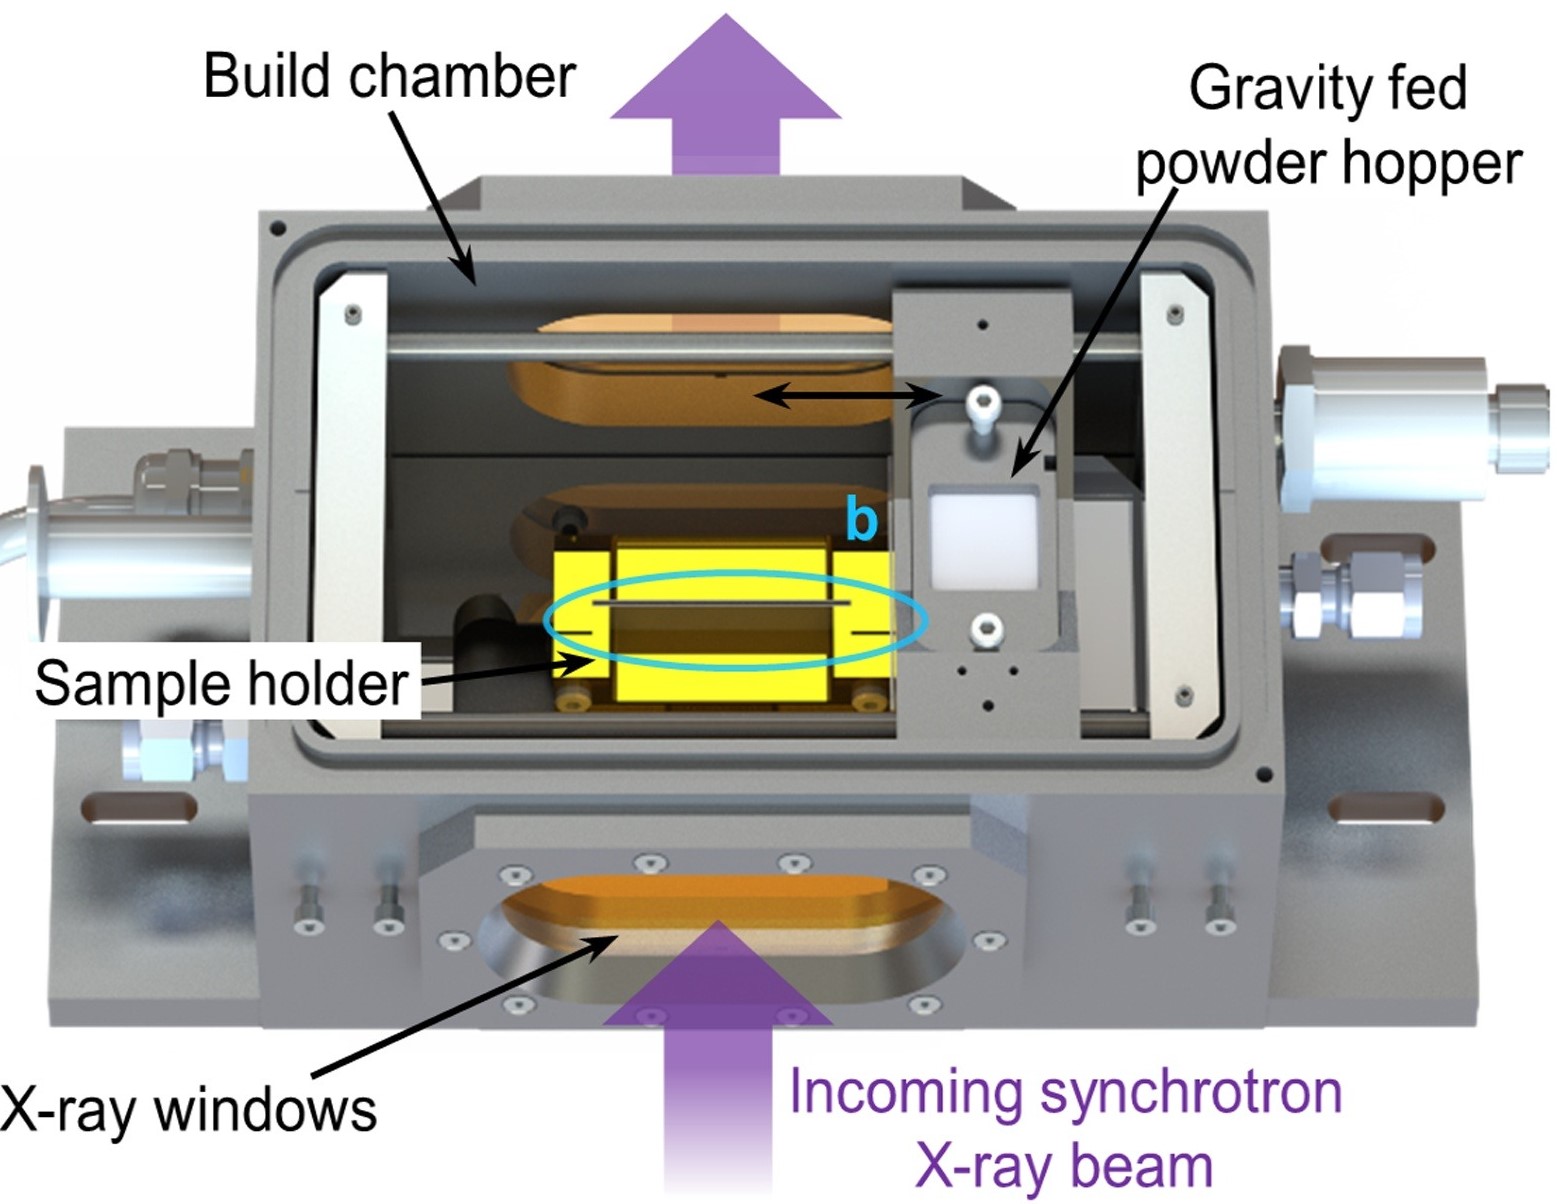  Shedding new light on laser powder bed fusion at ESRF – the European Synchrotron